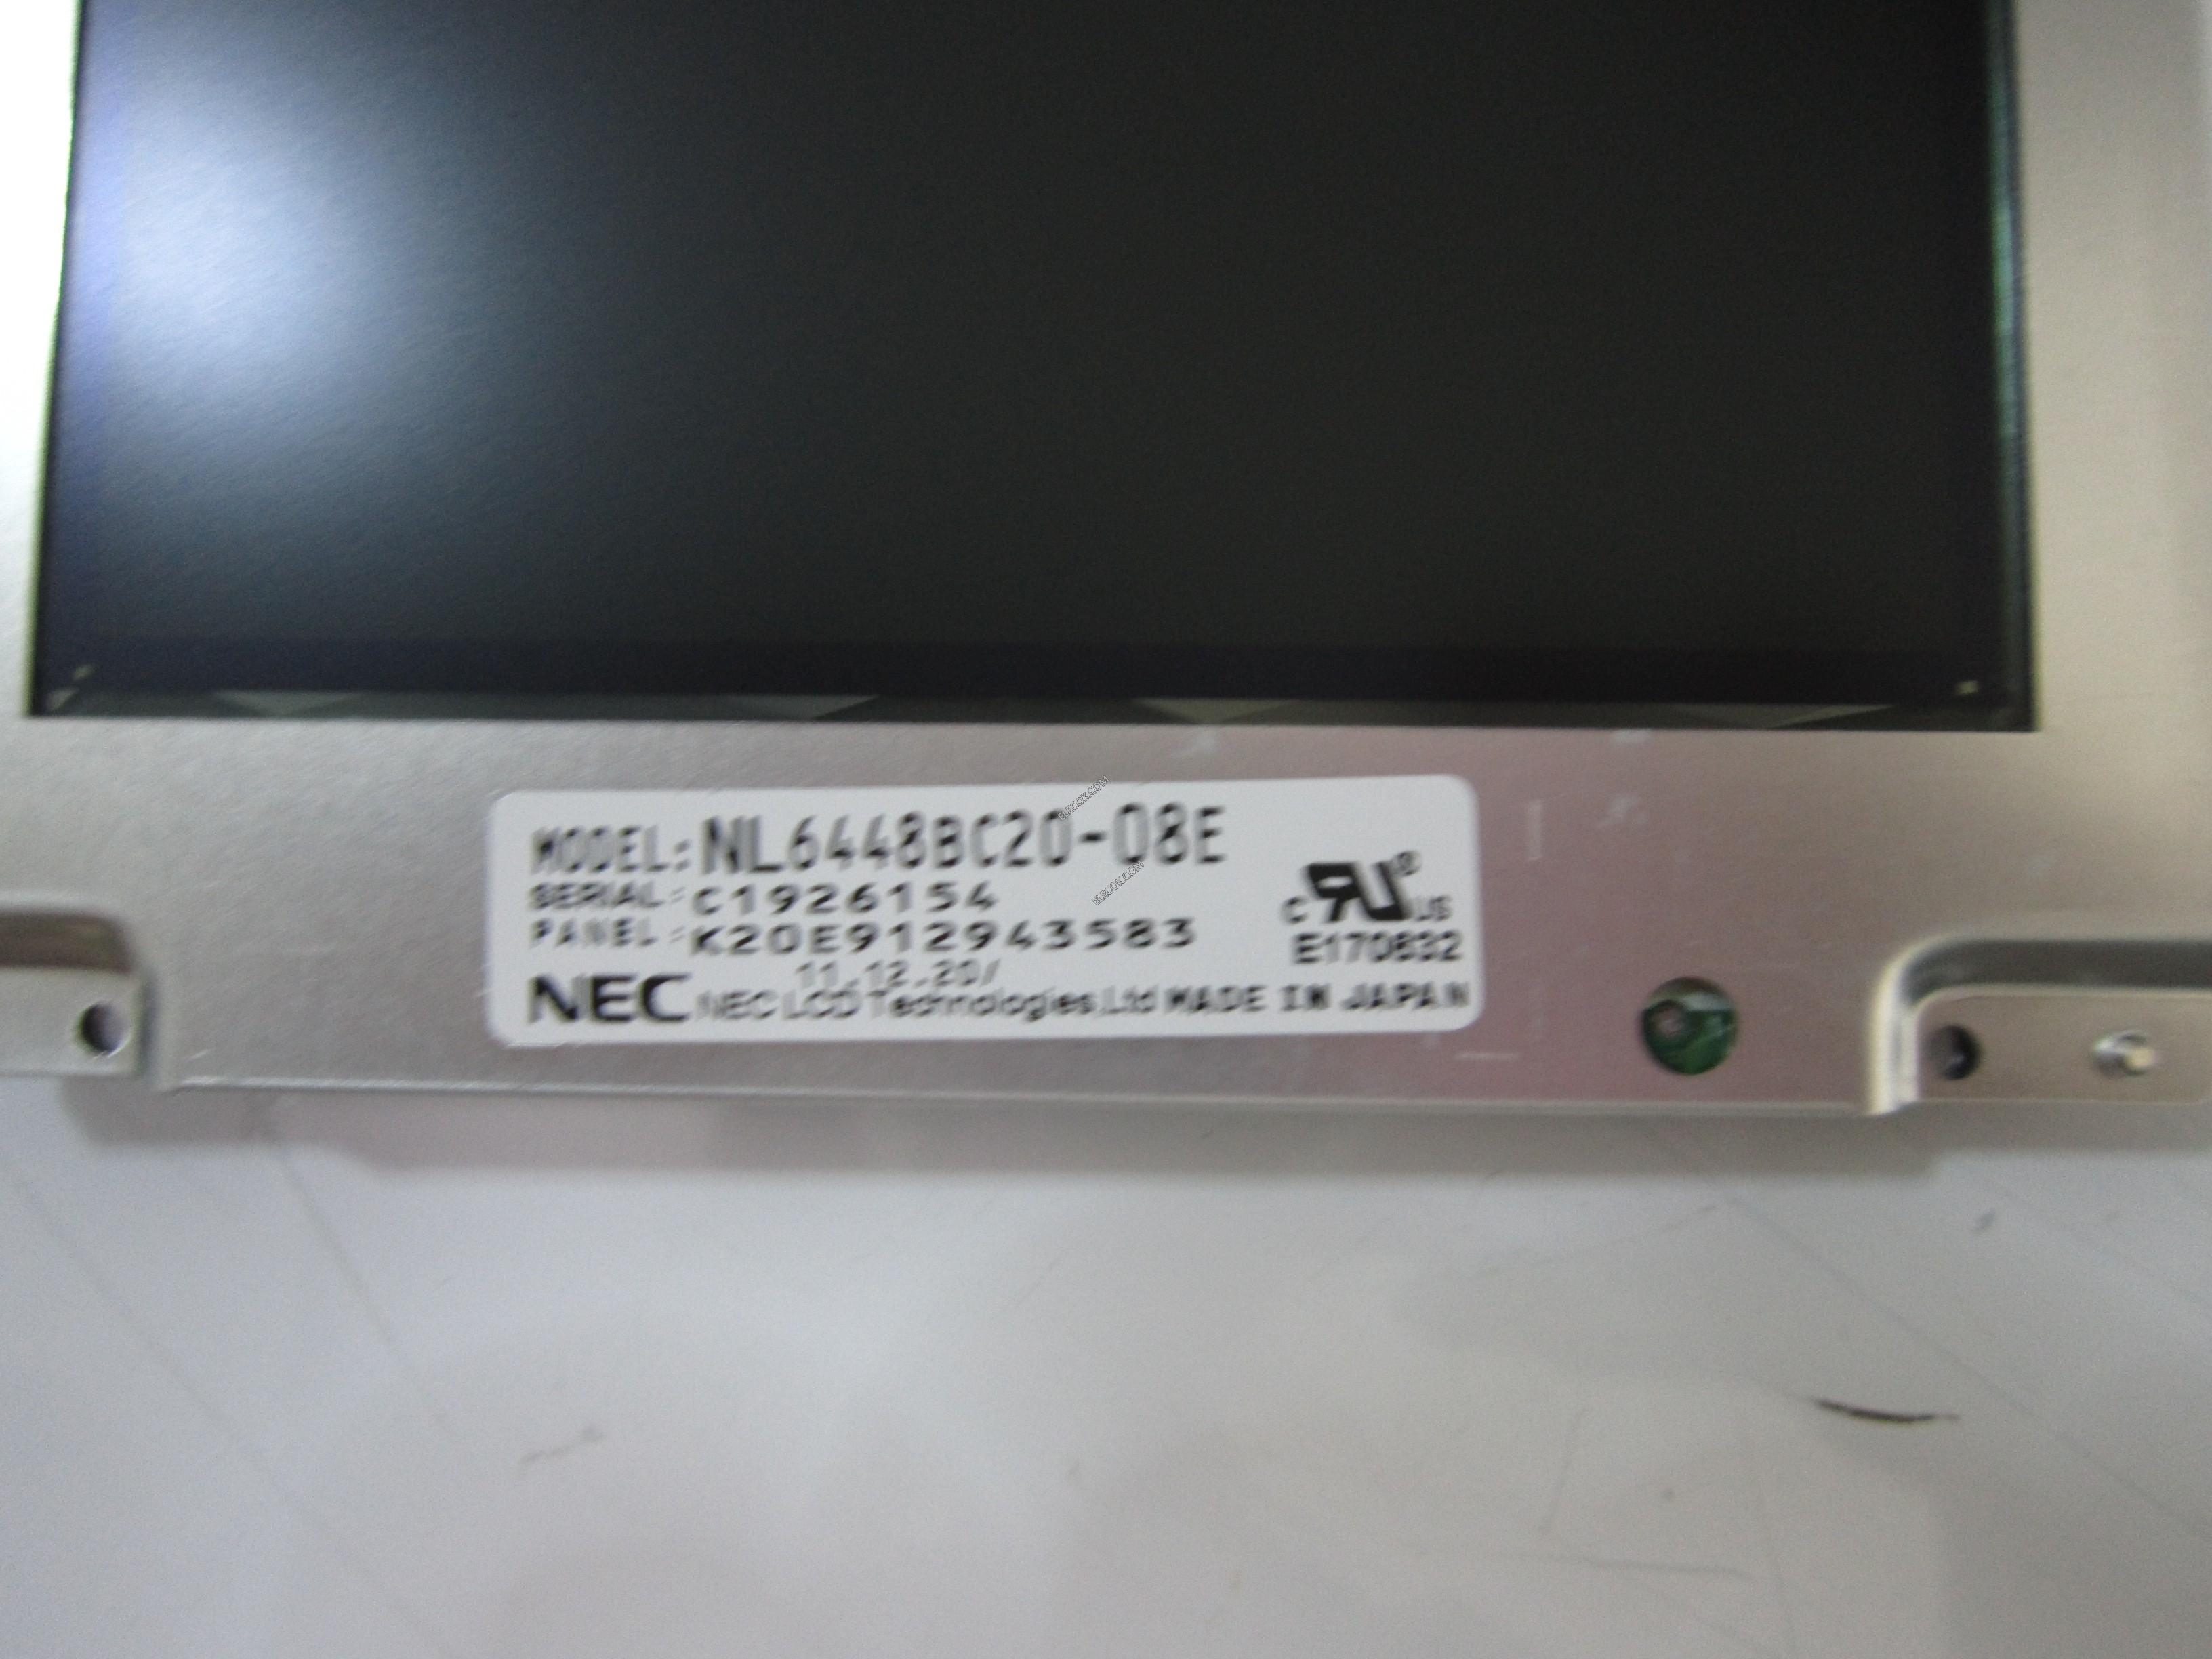 NEC 6.5" TFT LCD SCREENS MODEL NL6448BC20-08E FOR SALE